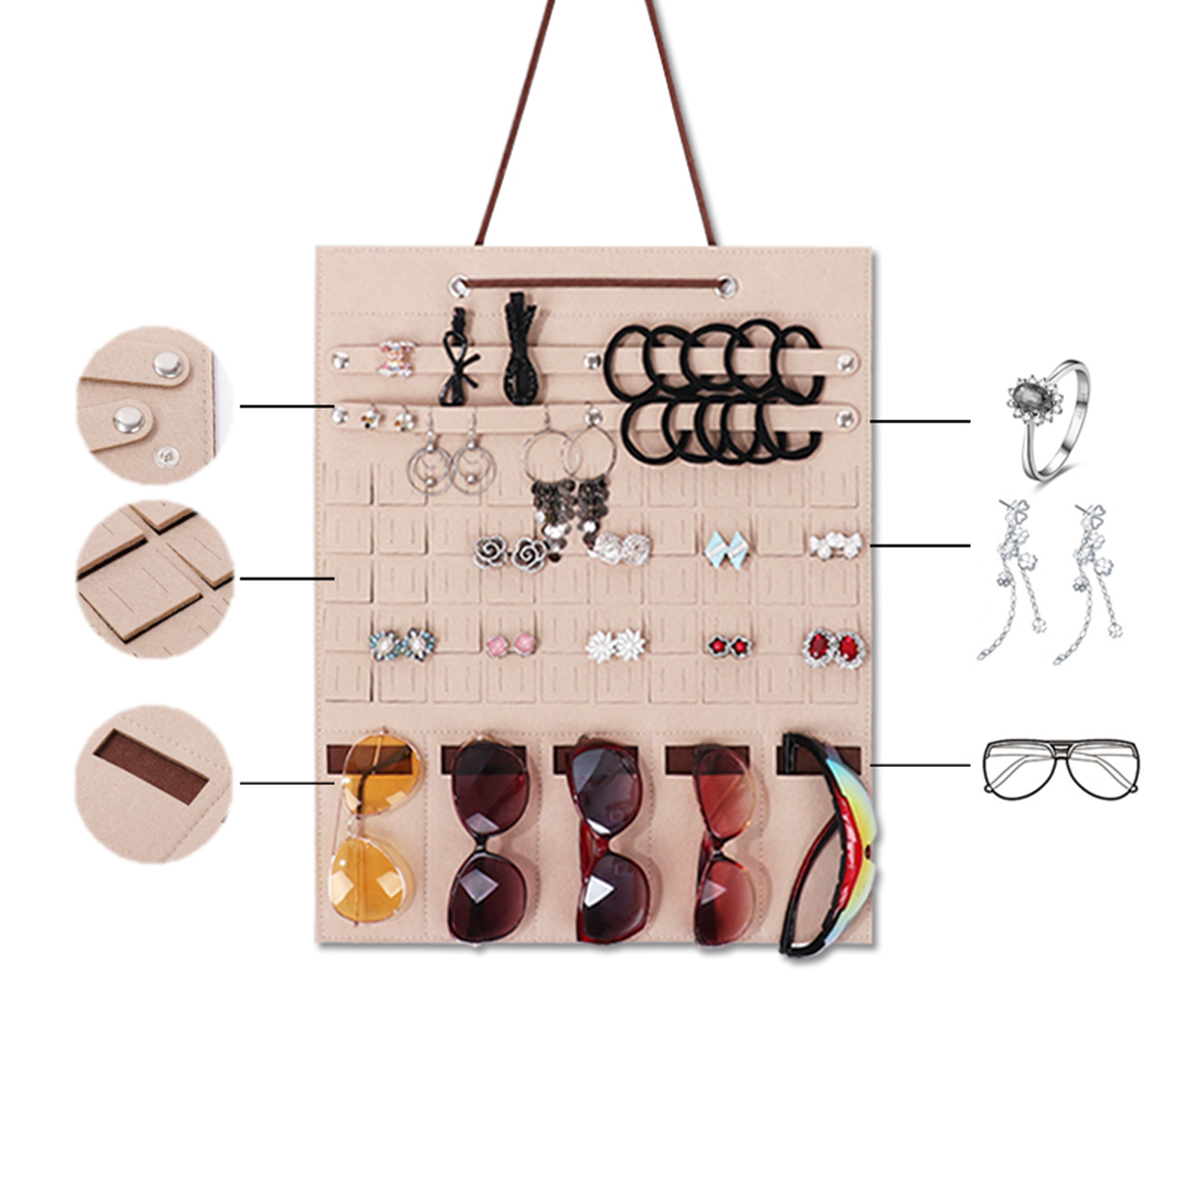 Slots-Felt-Sunglasses-Jewelry-Wall-Hanging-Bag-Organizer-Storage-Pocket-Display-1587251-3